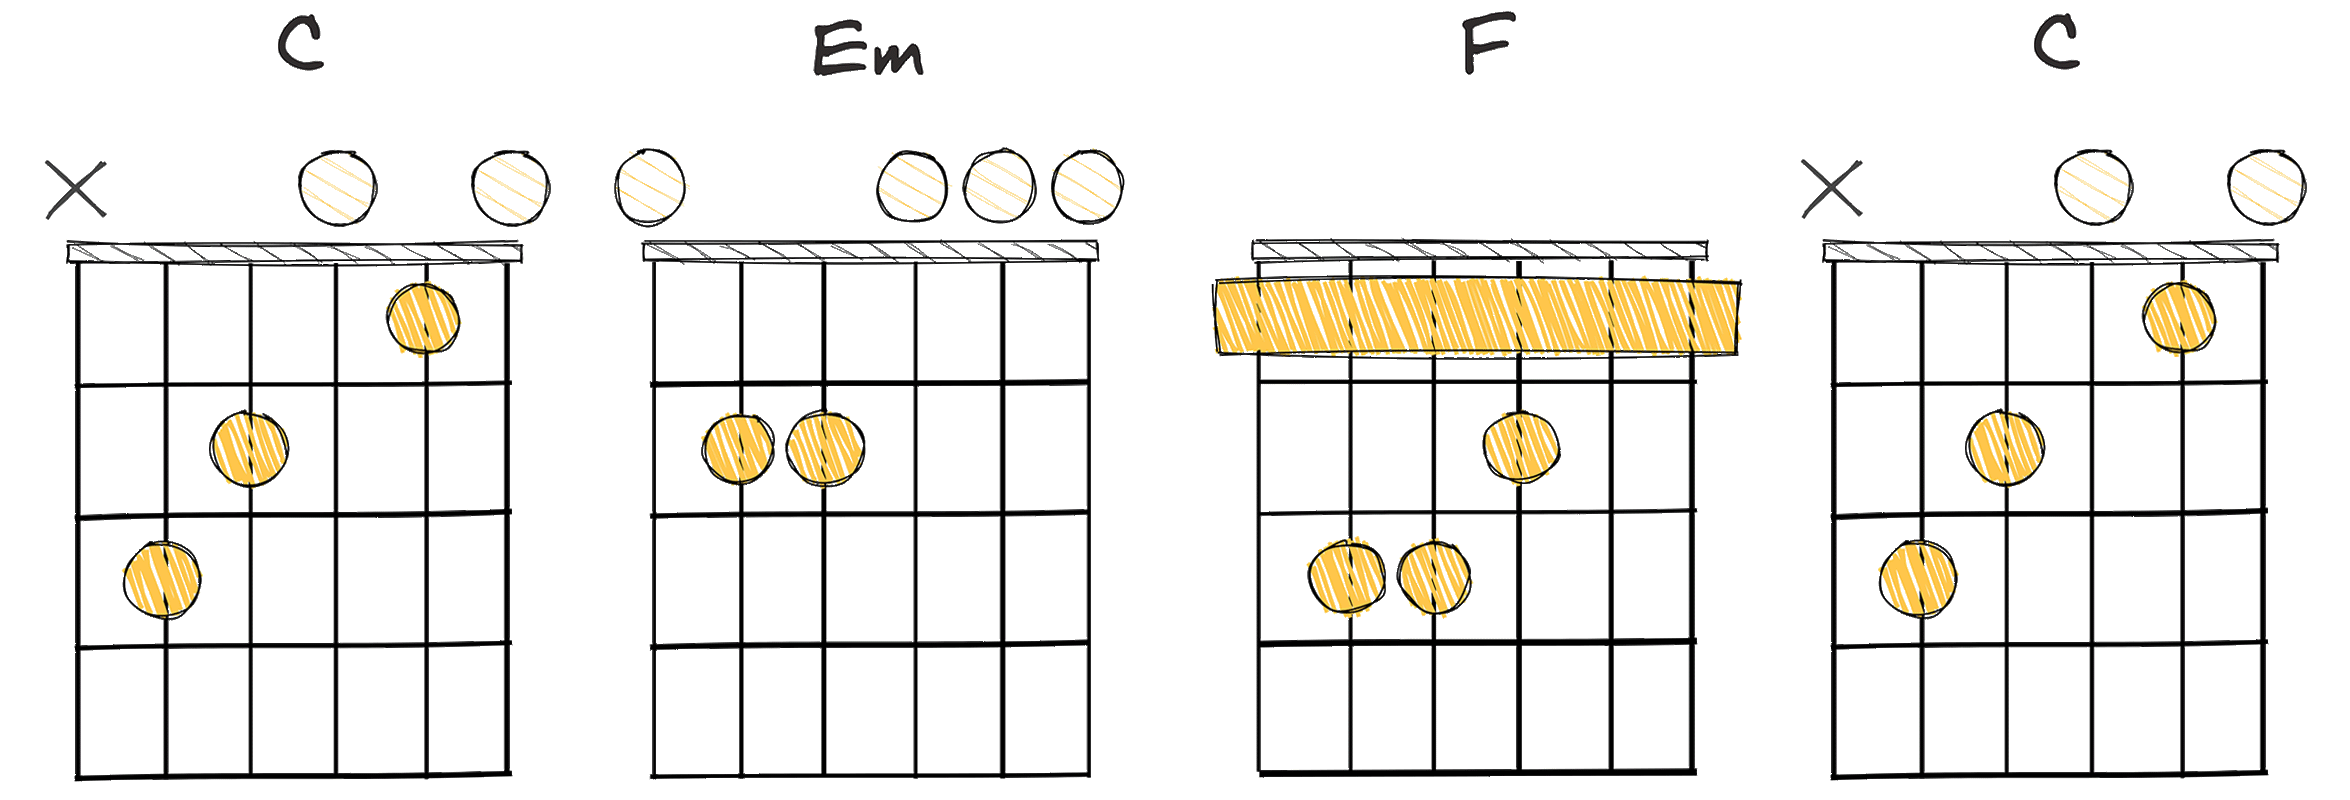 I-iii-IV-I (1-3-4-1) chords diagram